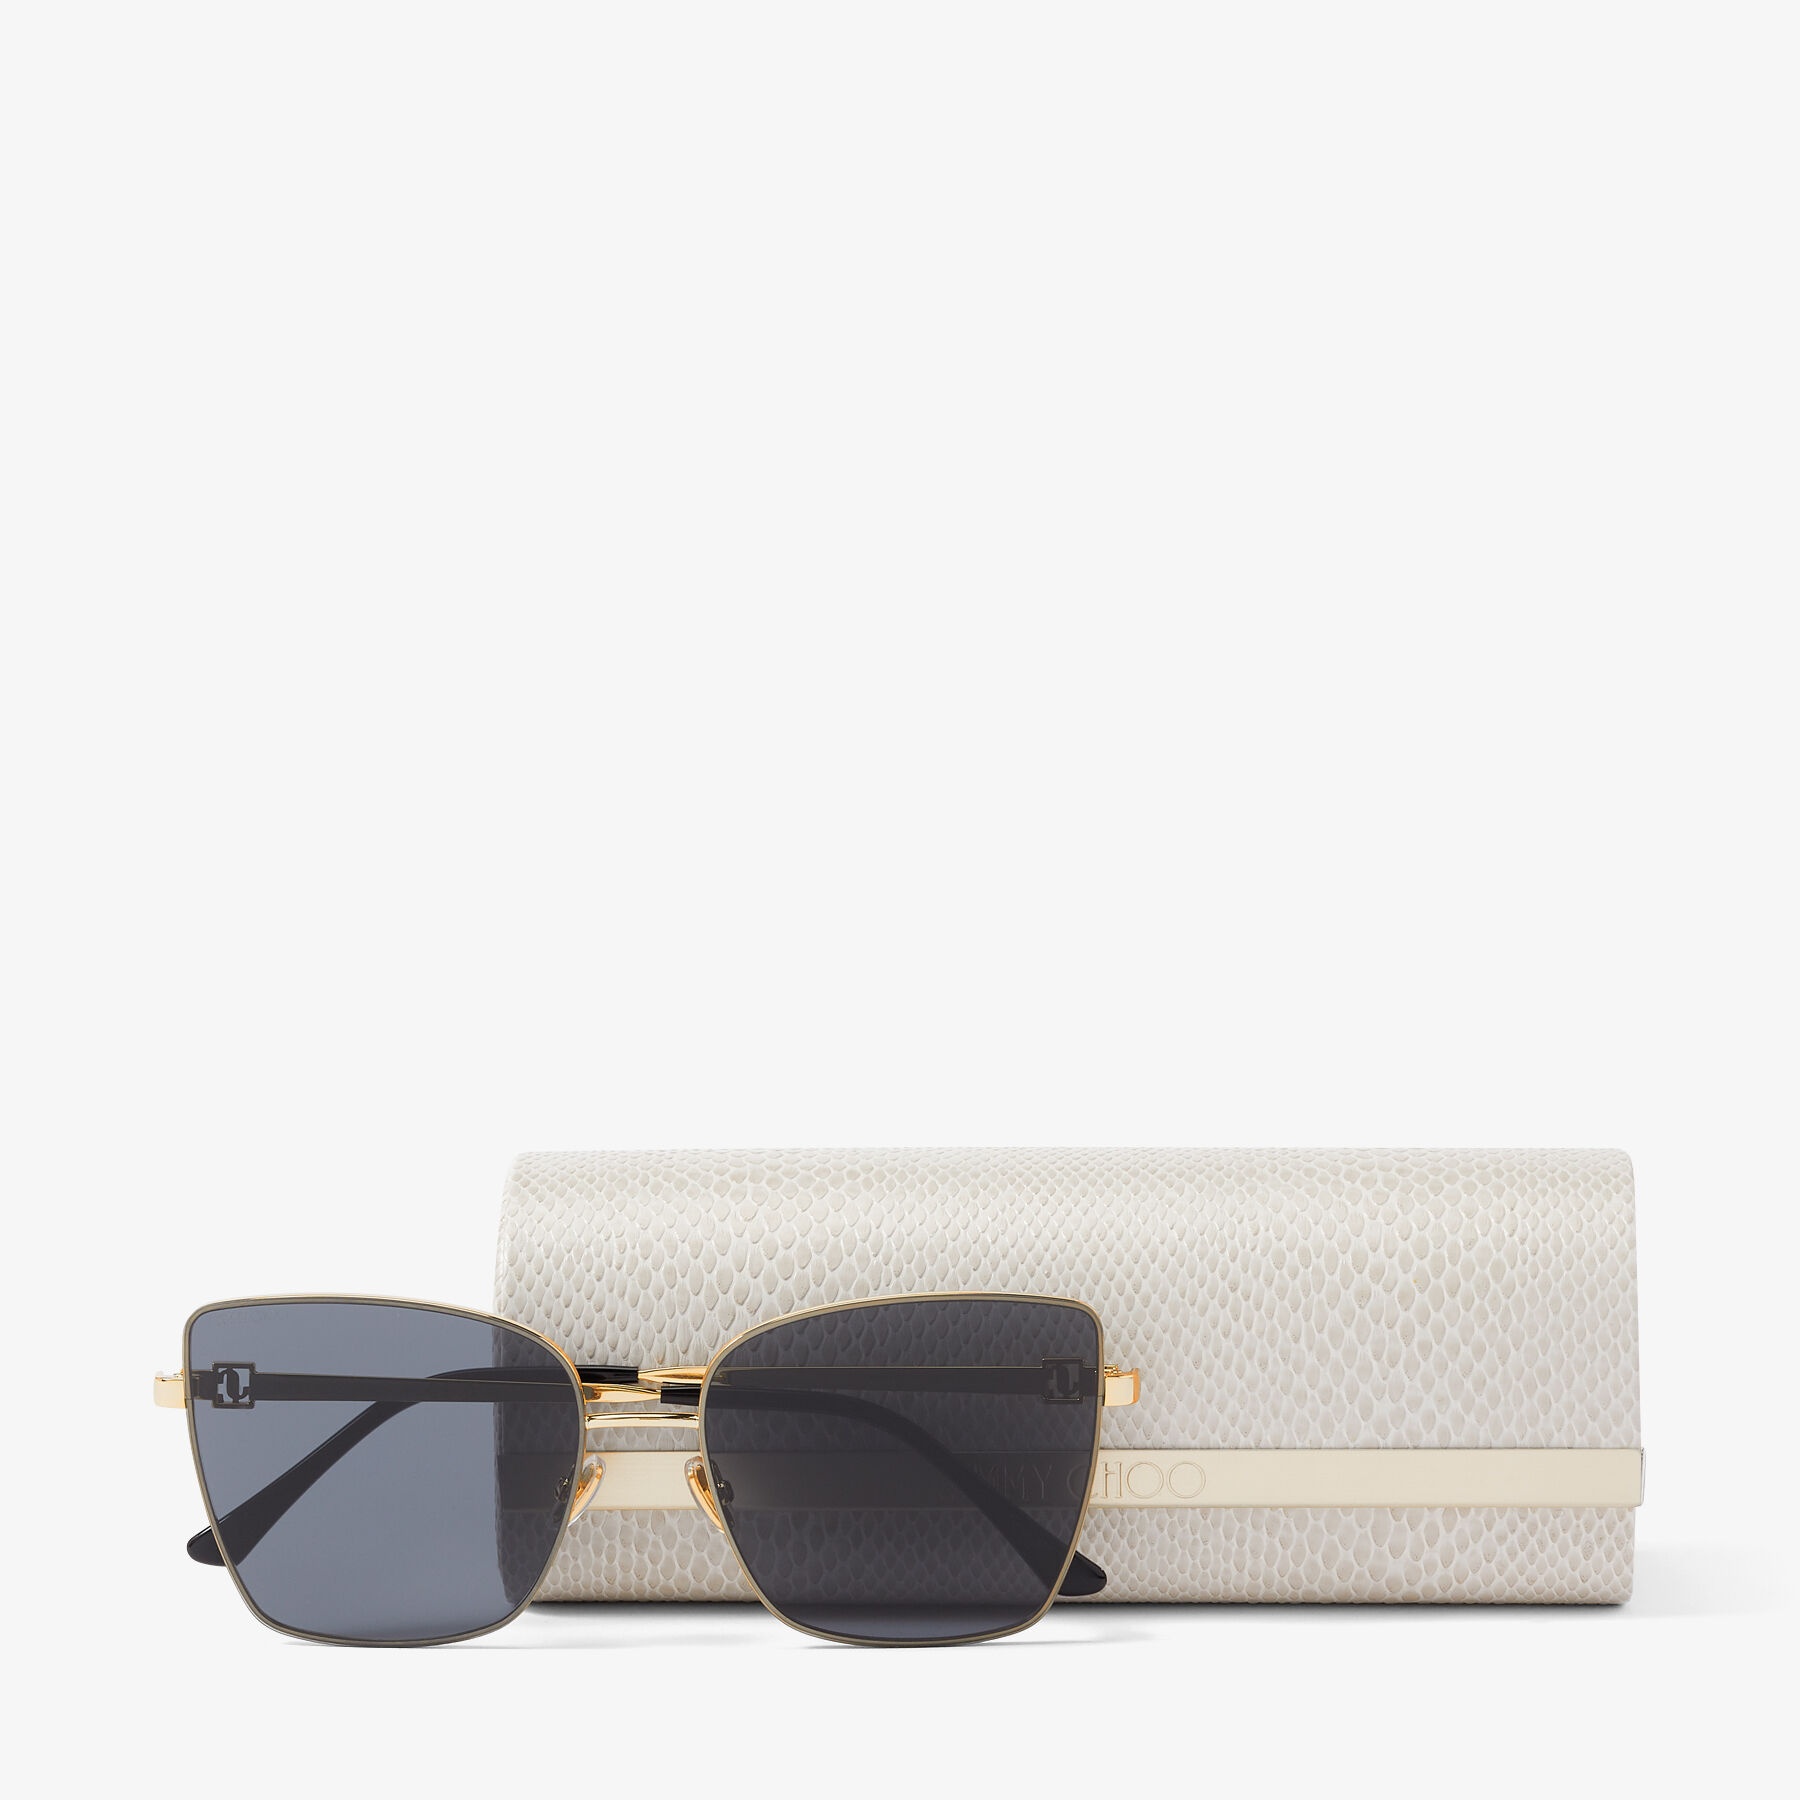 Vella/S 59
Rose Gold and Black Square Frame Sunglasses with JC Emblem - 4